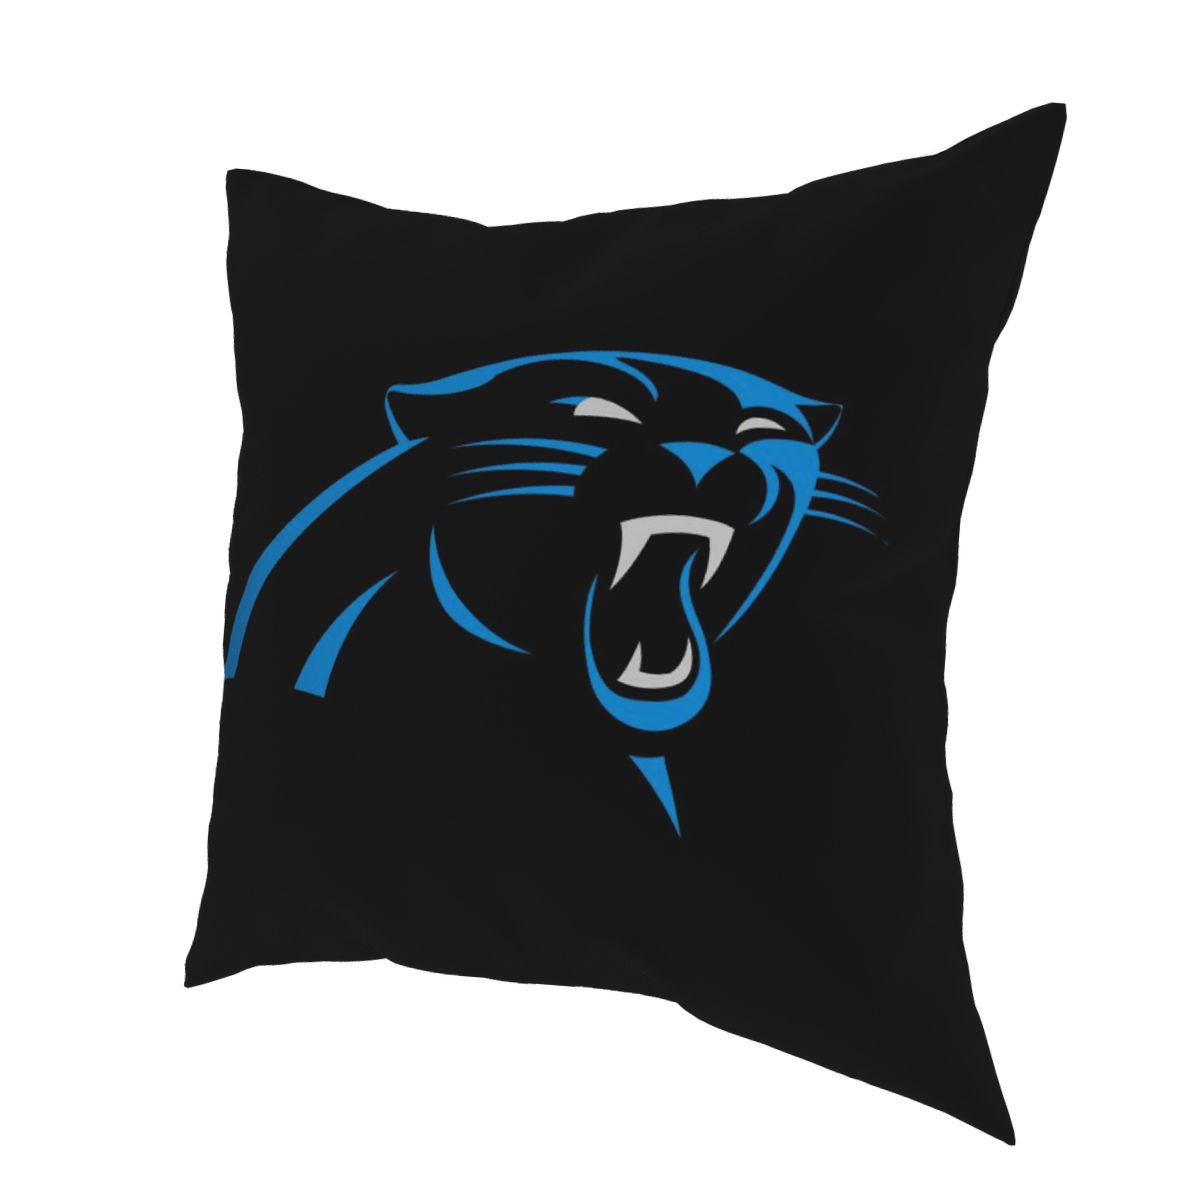 Custom Decorative Football Pillow Case Carolina Panthers Black Pillowcase Personalized Throw Pillow Covers